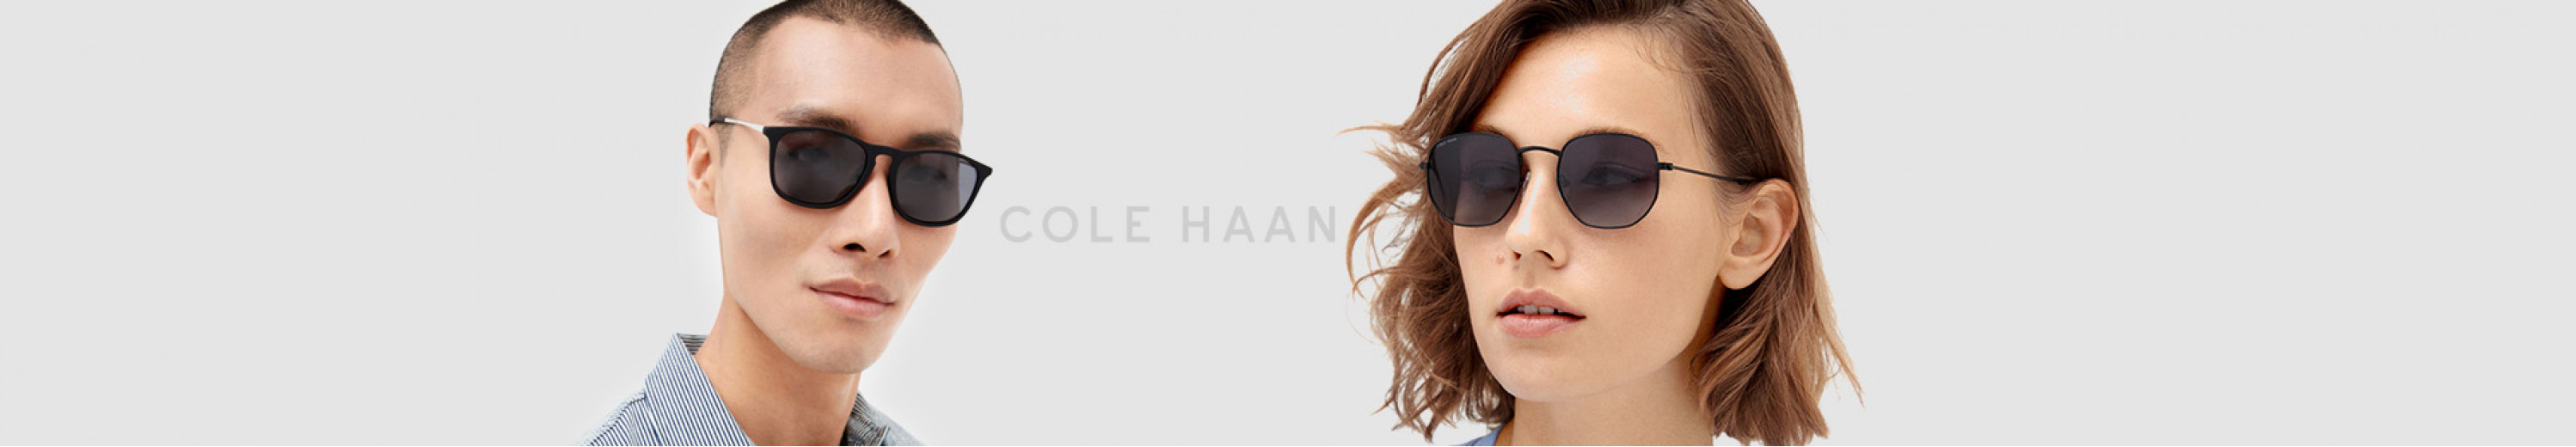 Cole Haan Sunglasses